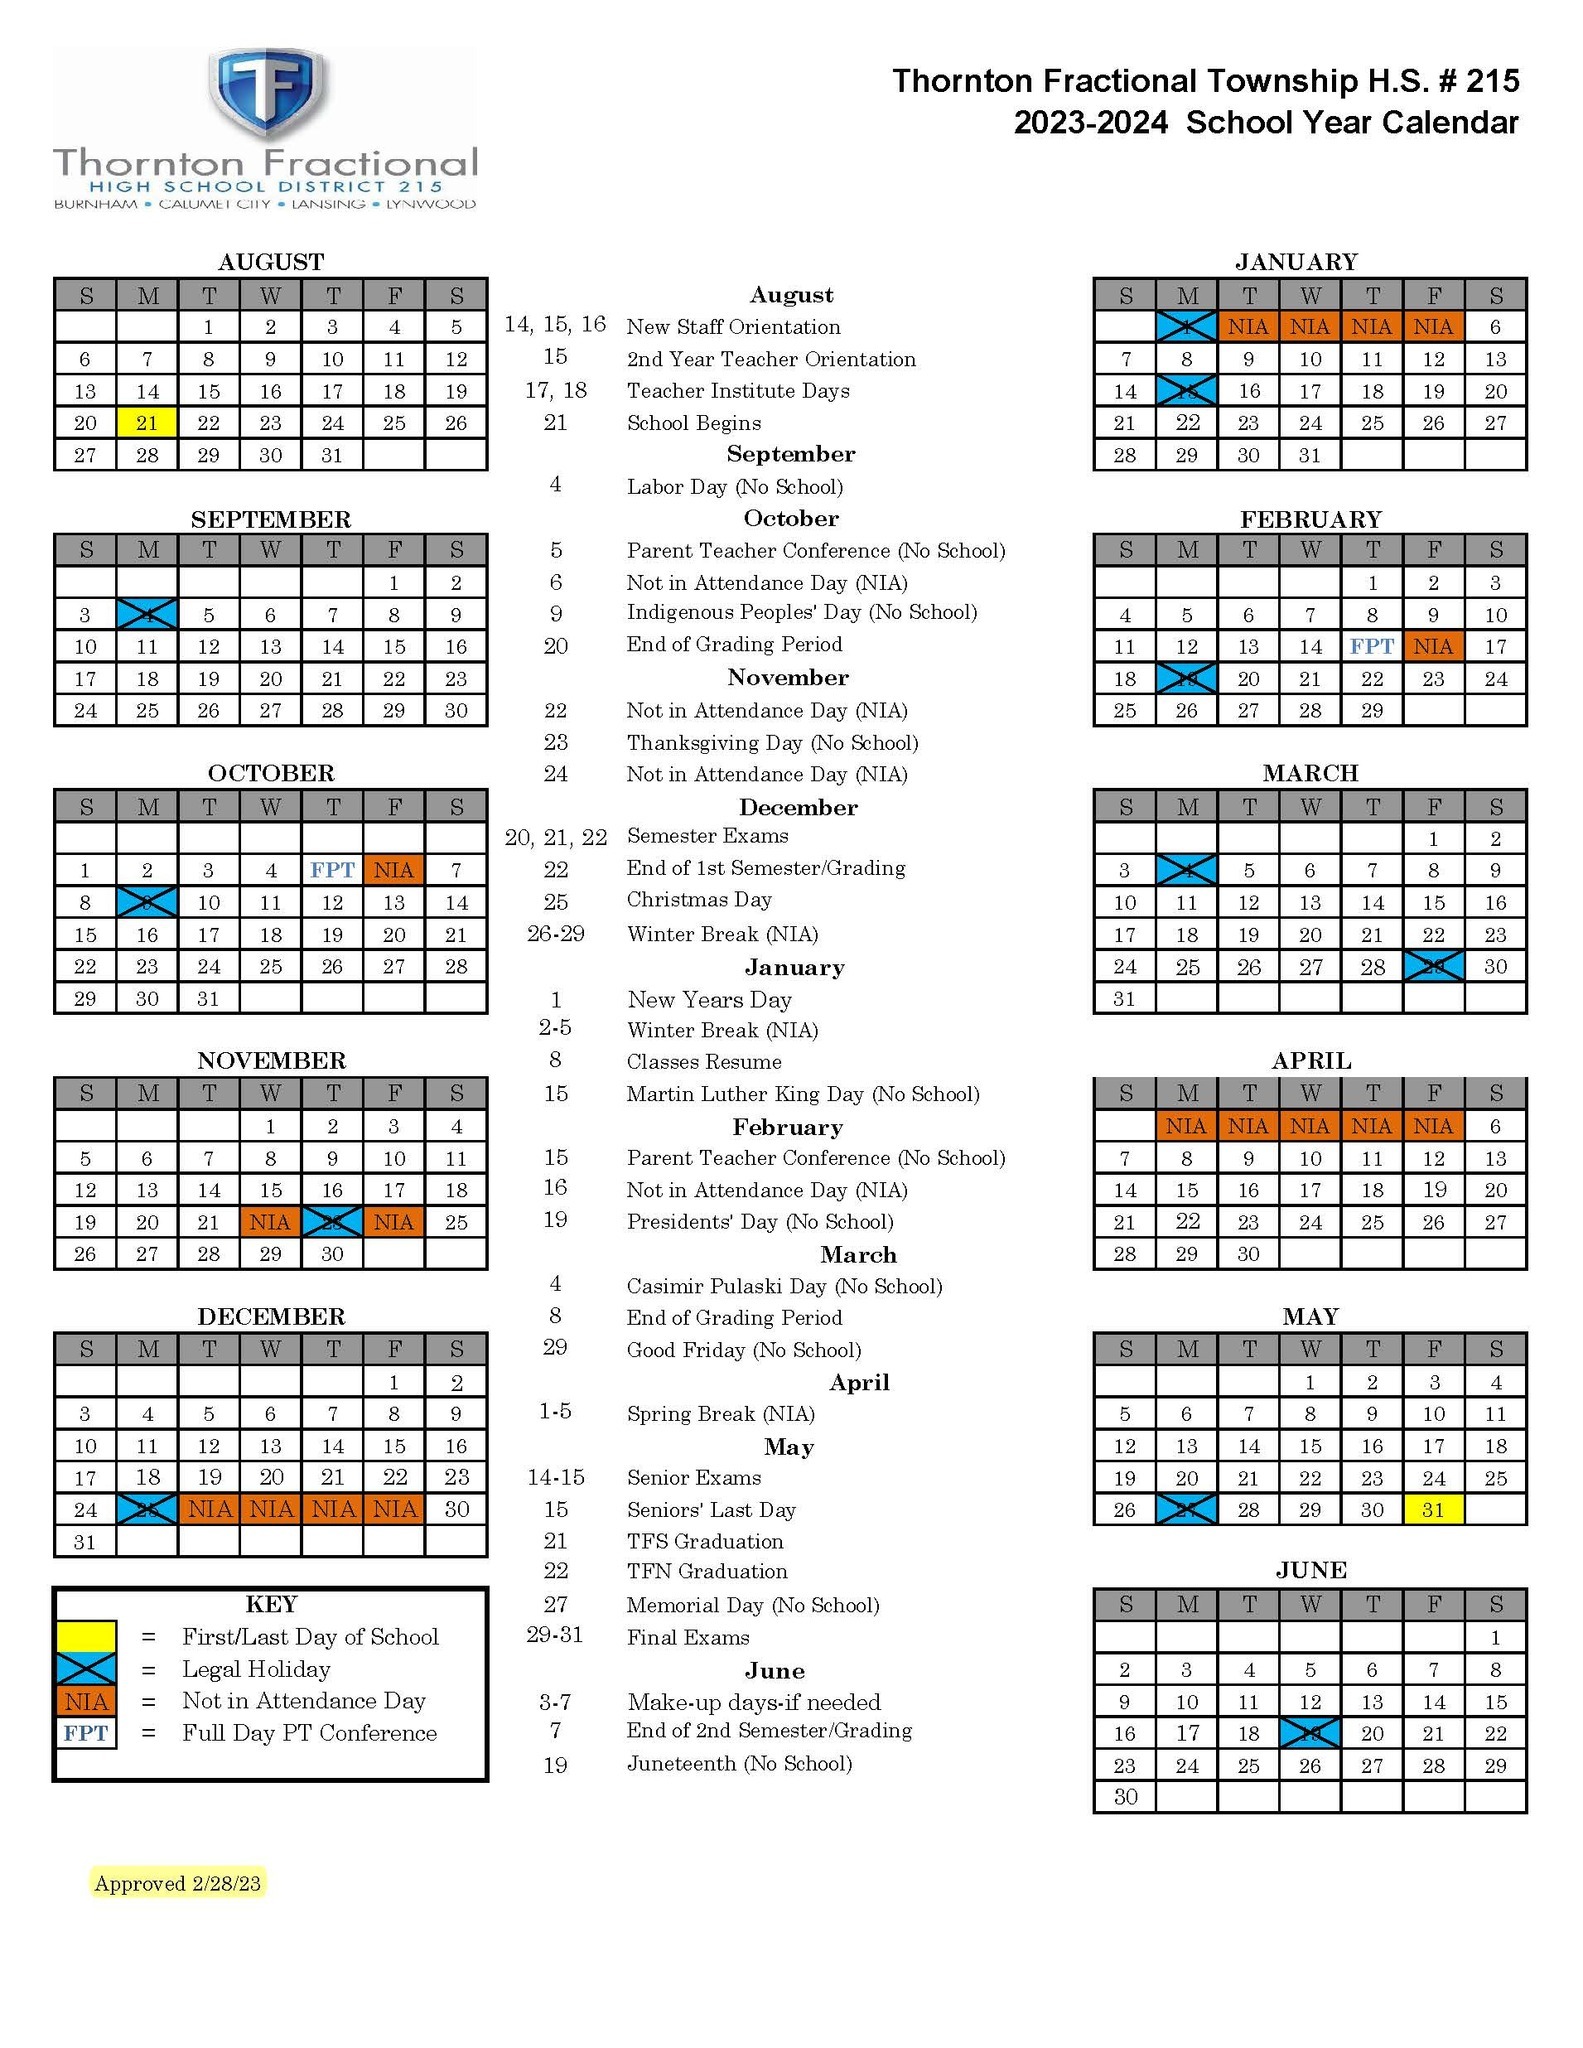 Image of District Calendar 2023-2024